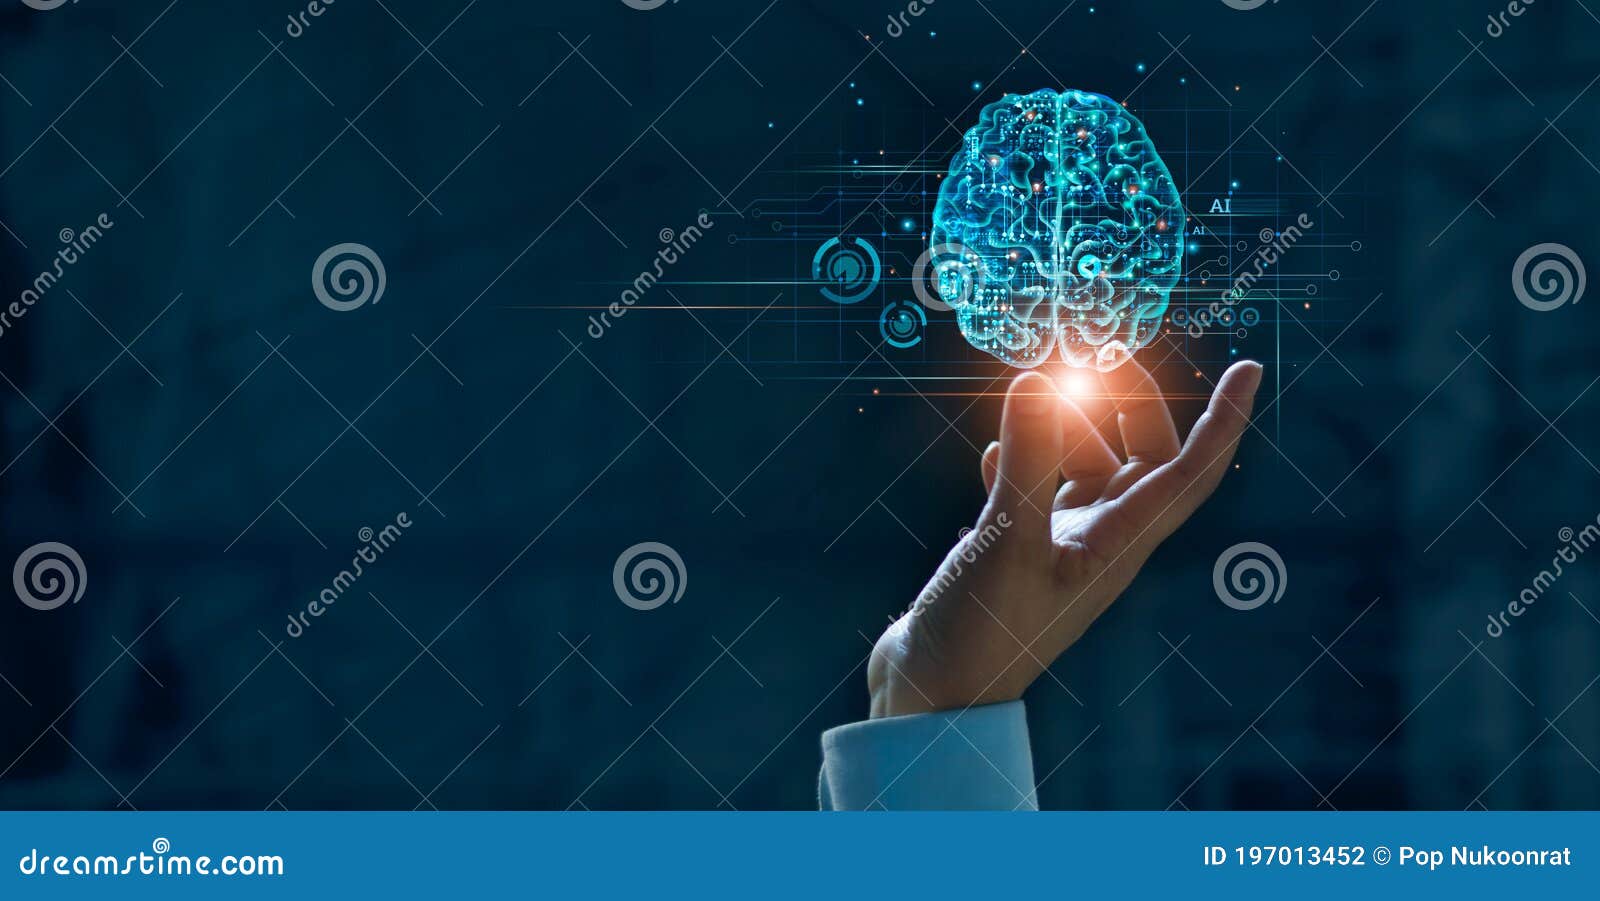 hand touching brain of ai, ic, machine learning, artificial intelligence of futuristic technology. ai network of brain